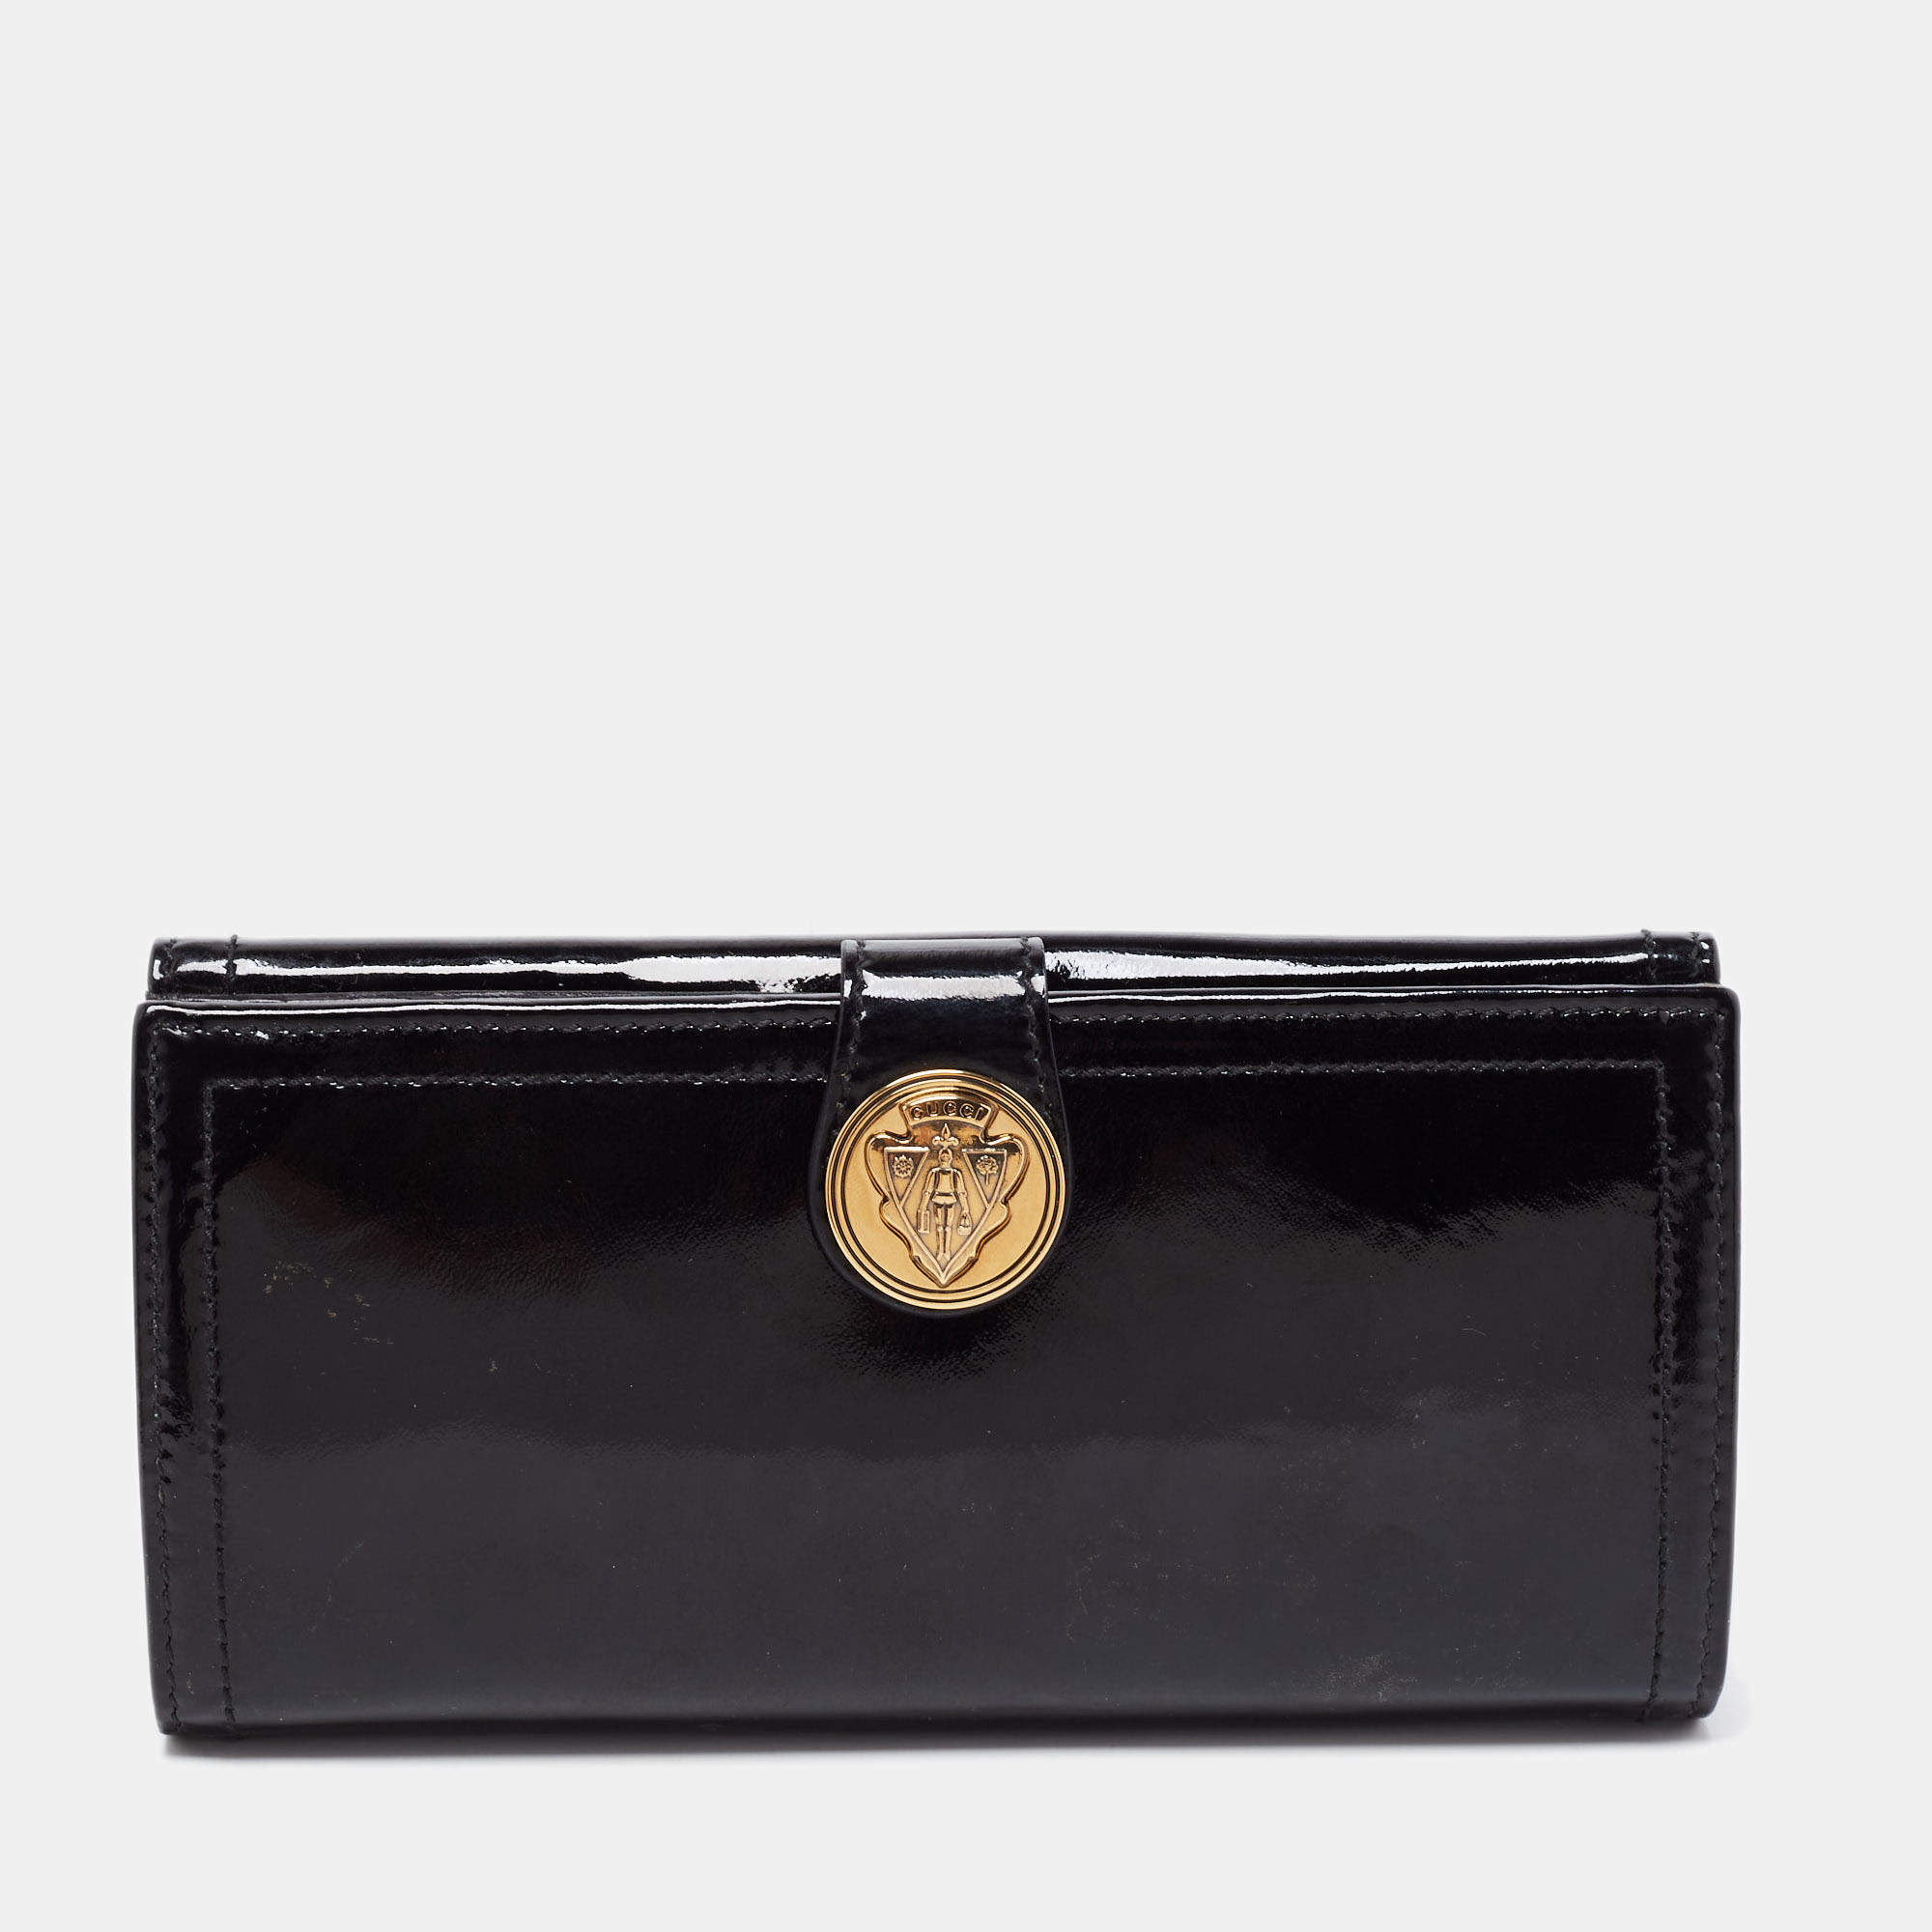 Gucci Black Patent Leather Hysteria Continental Wallet Gucci | The ...